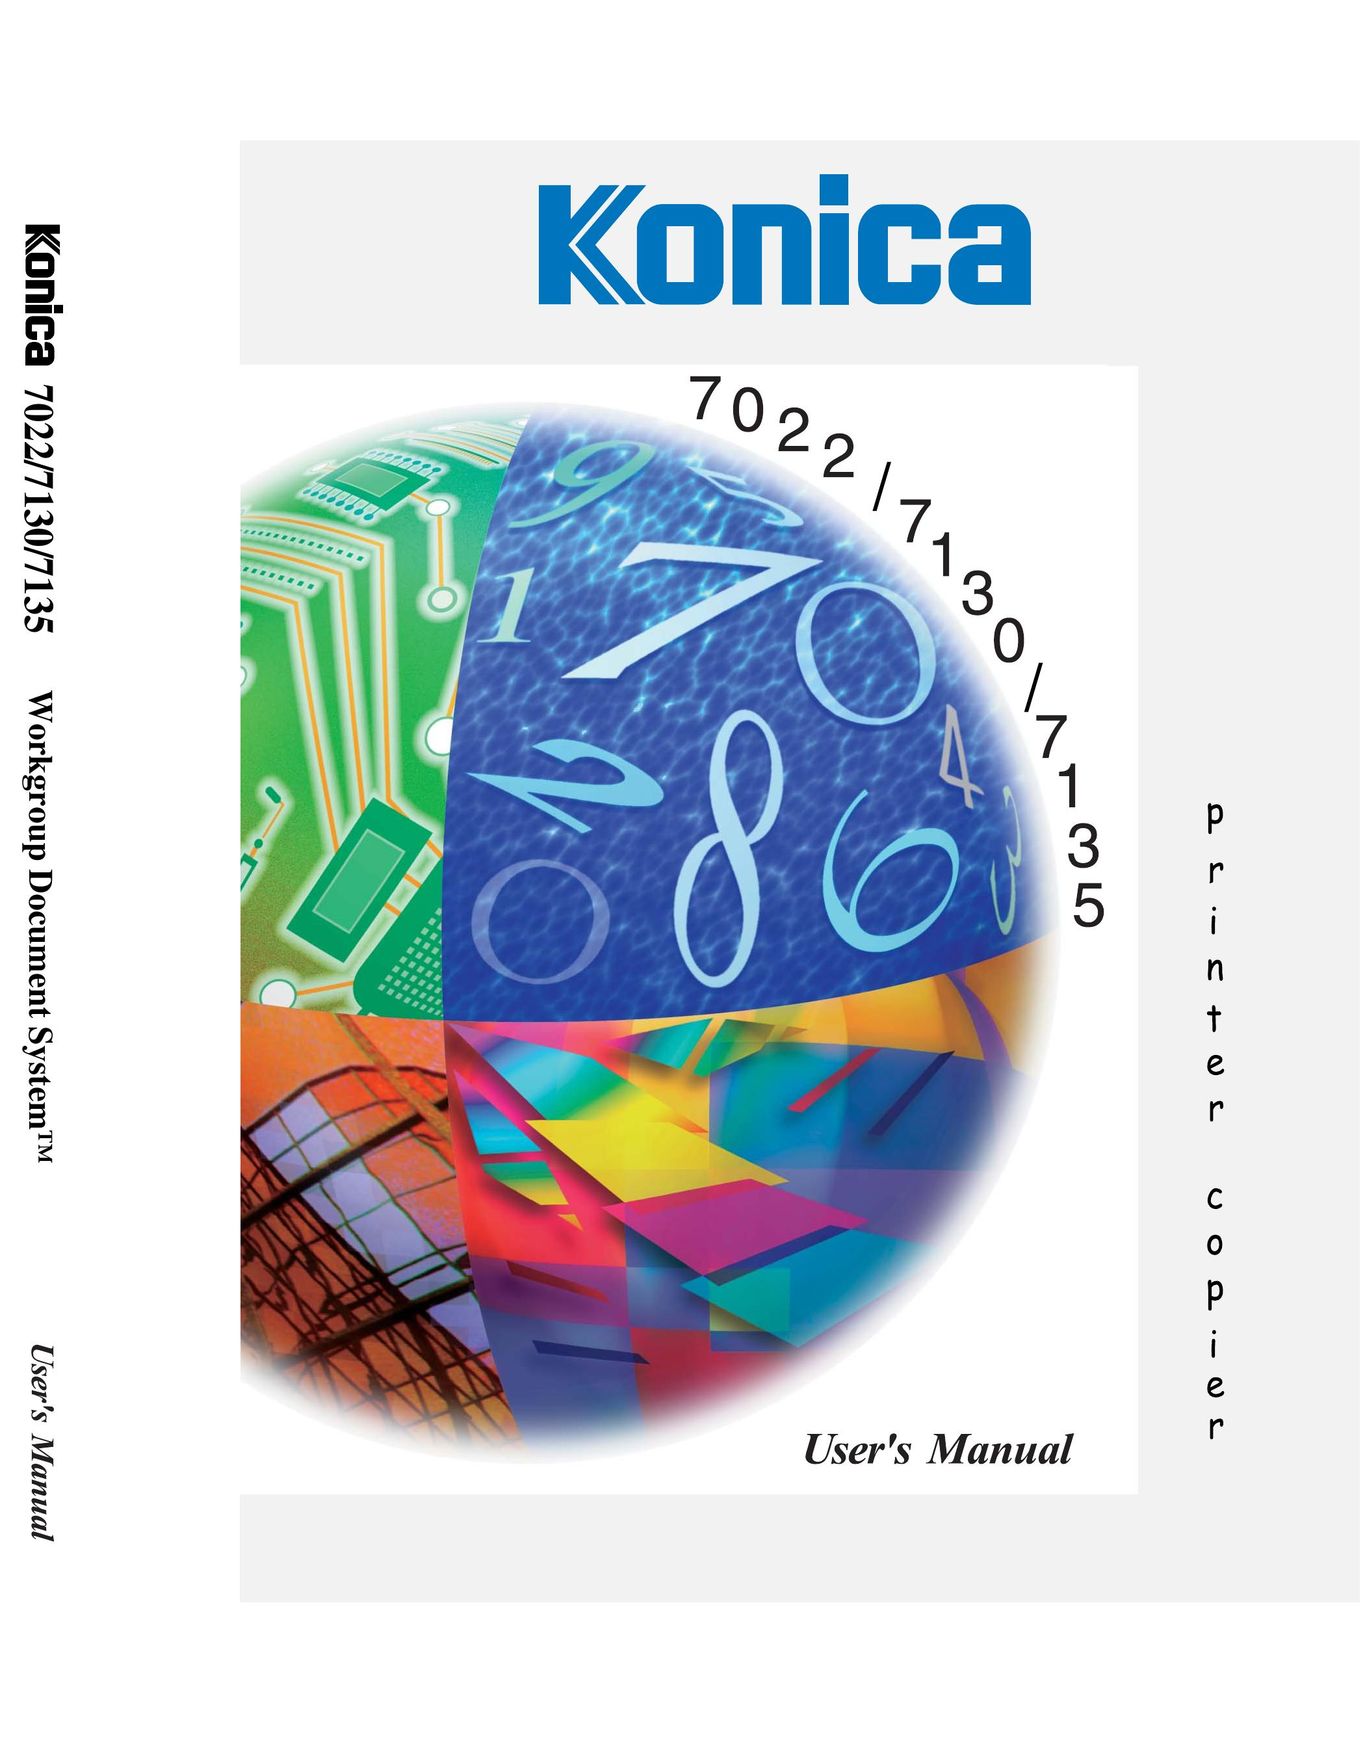 Konica Minolta 7130 Printer User Manual